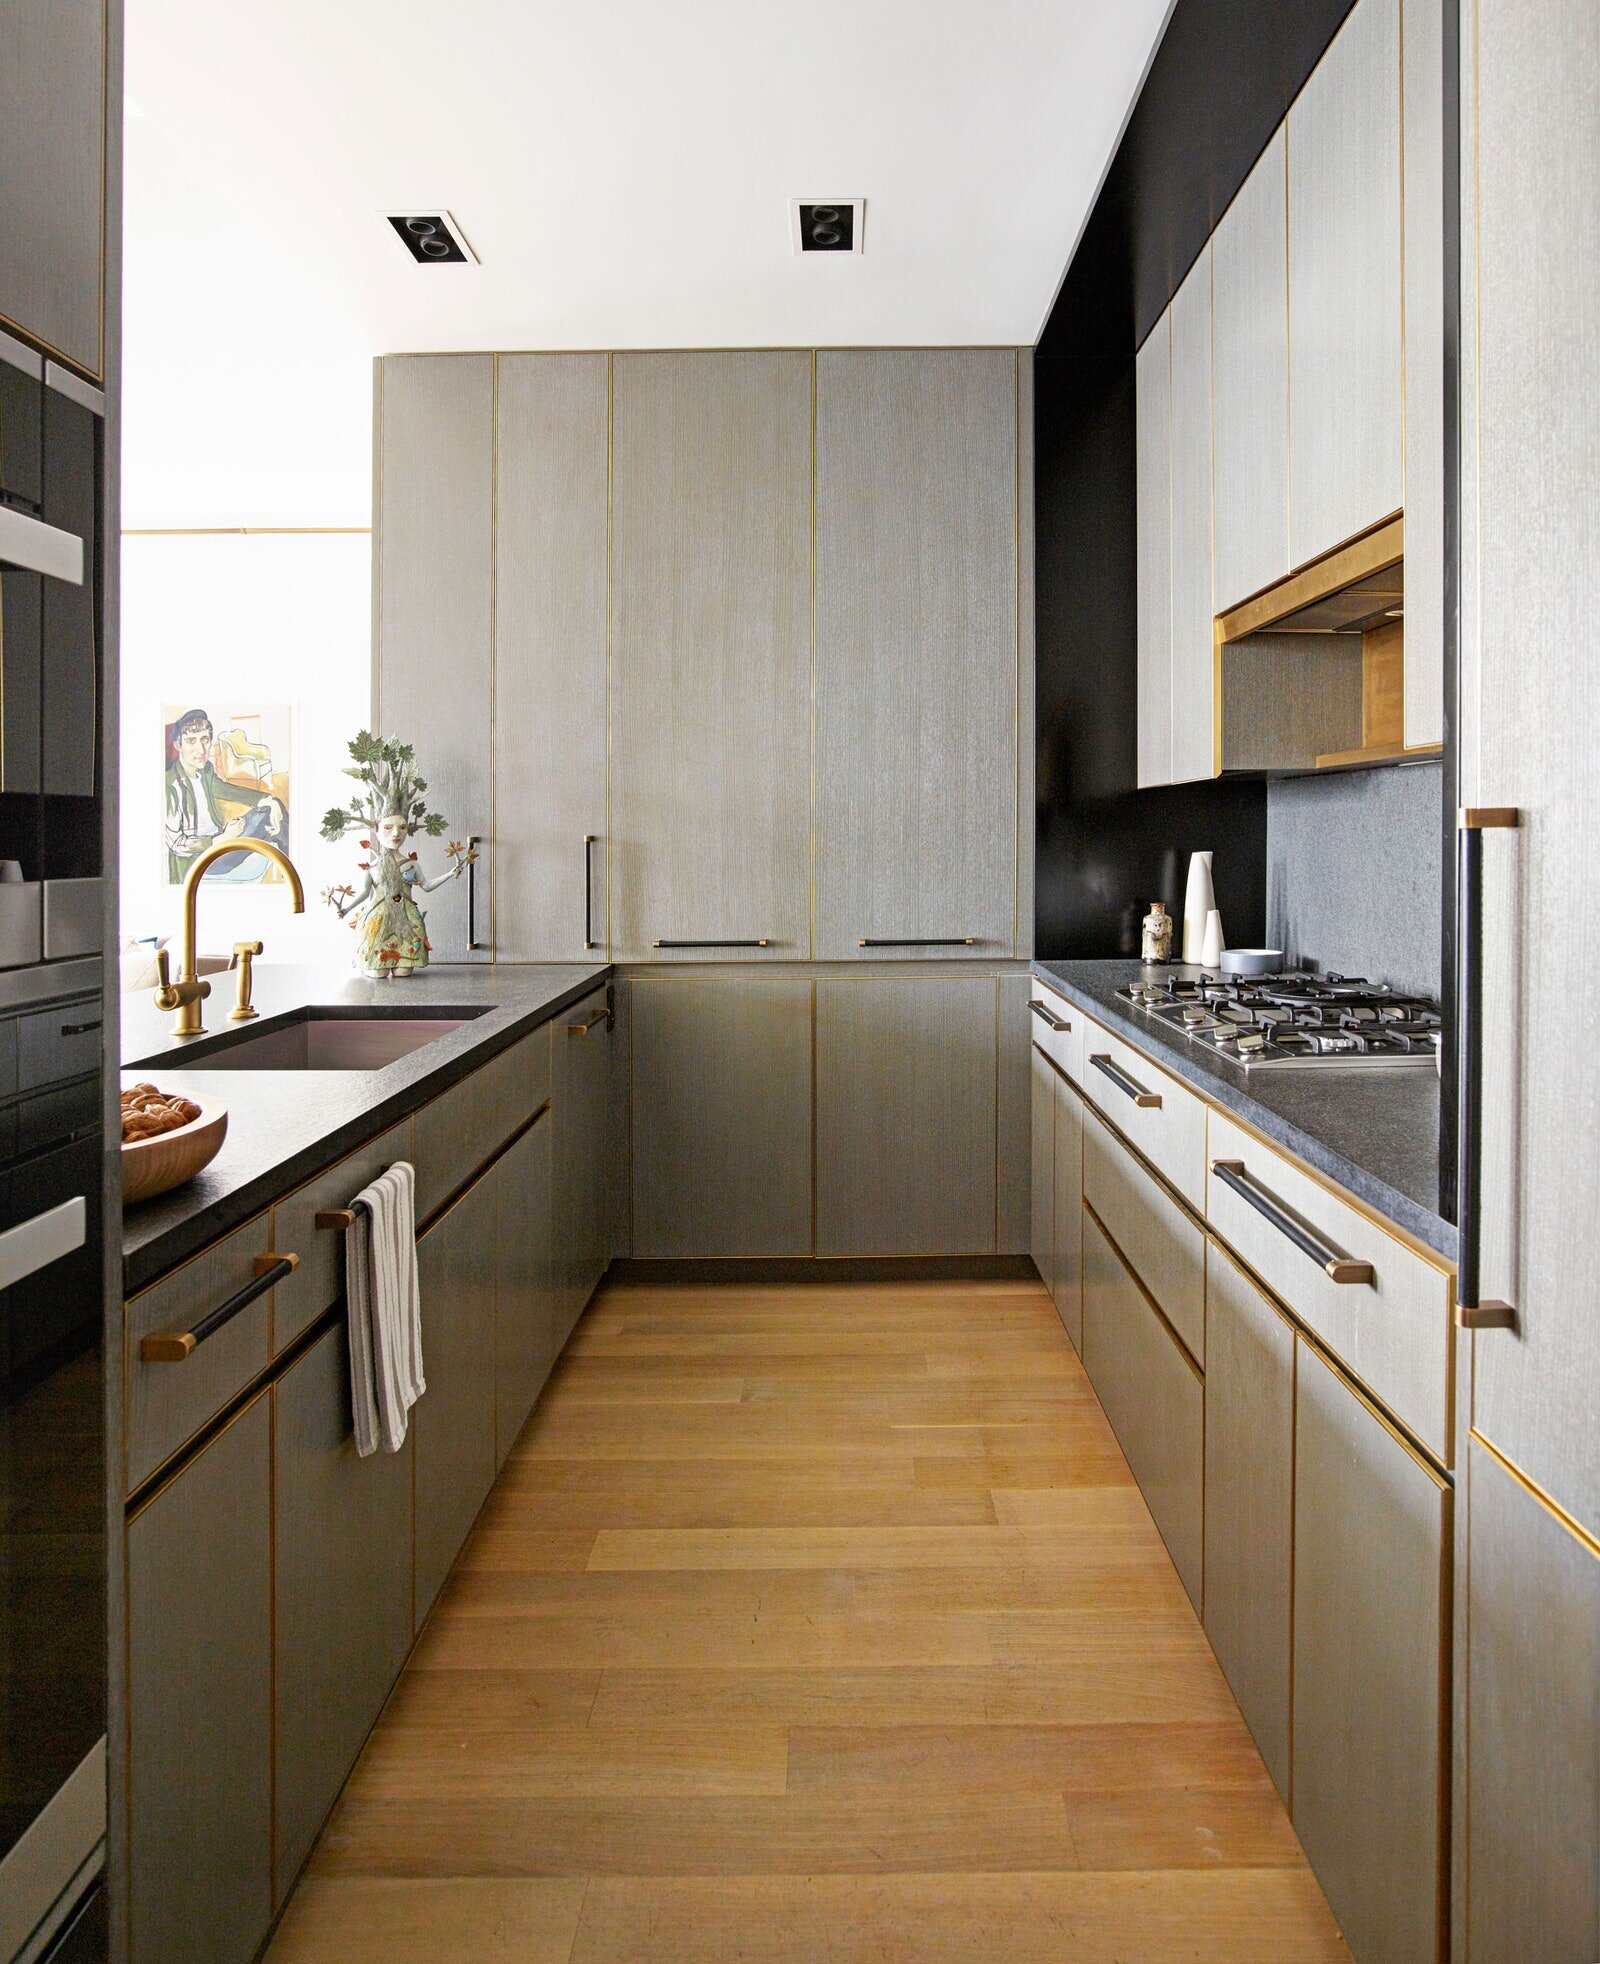 10 kitchen cupboard organisation ideas to maximise storage space